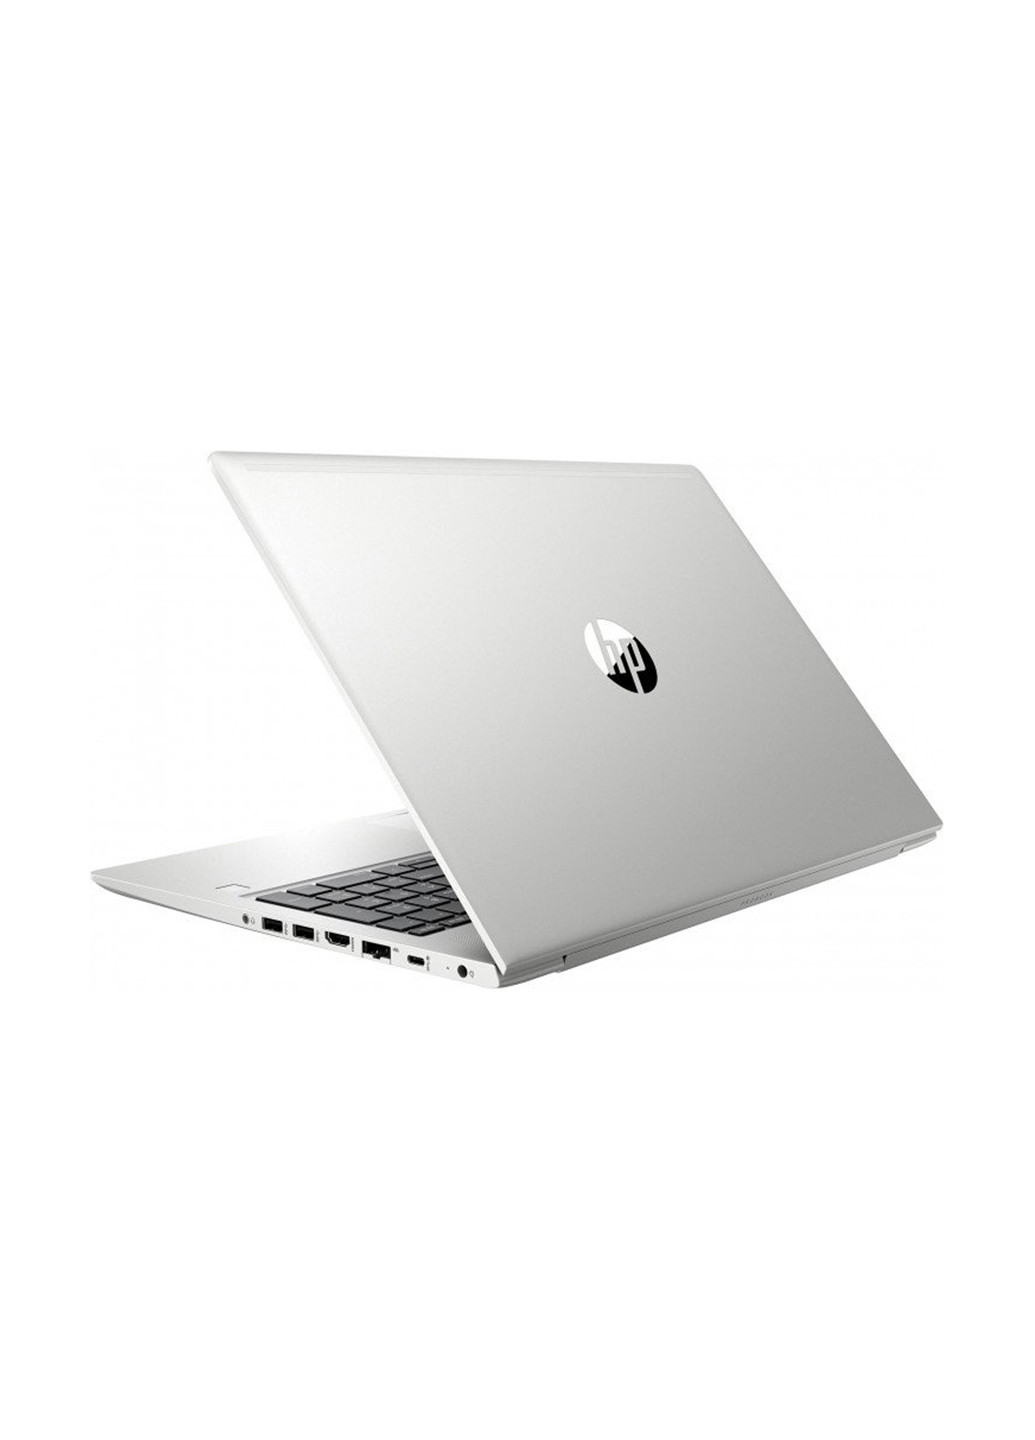 Ноутбук HP probook 450 g6 (4sz47av_v26) silver (173921878)